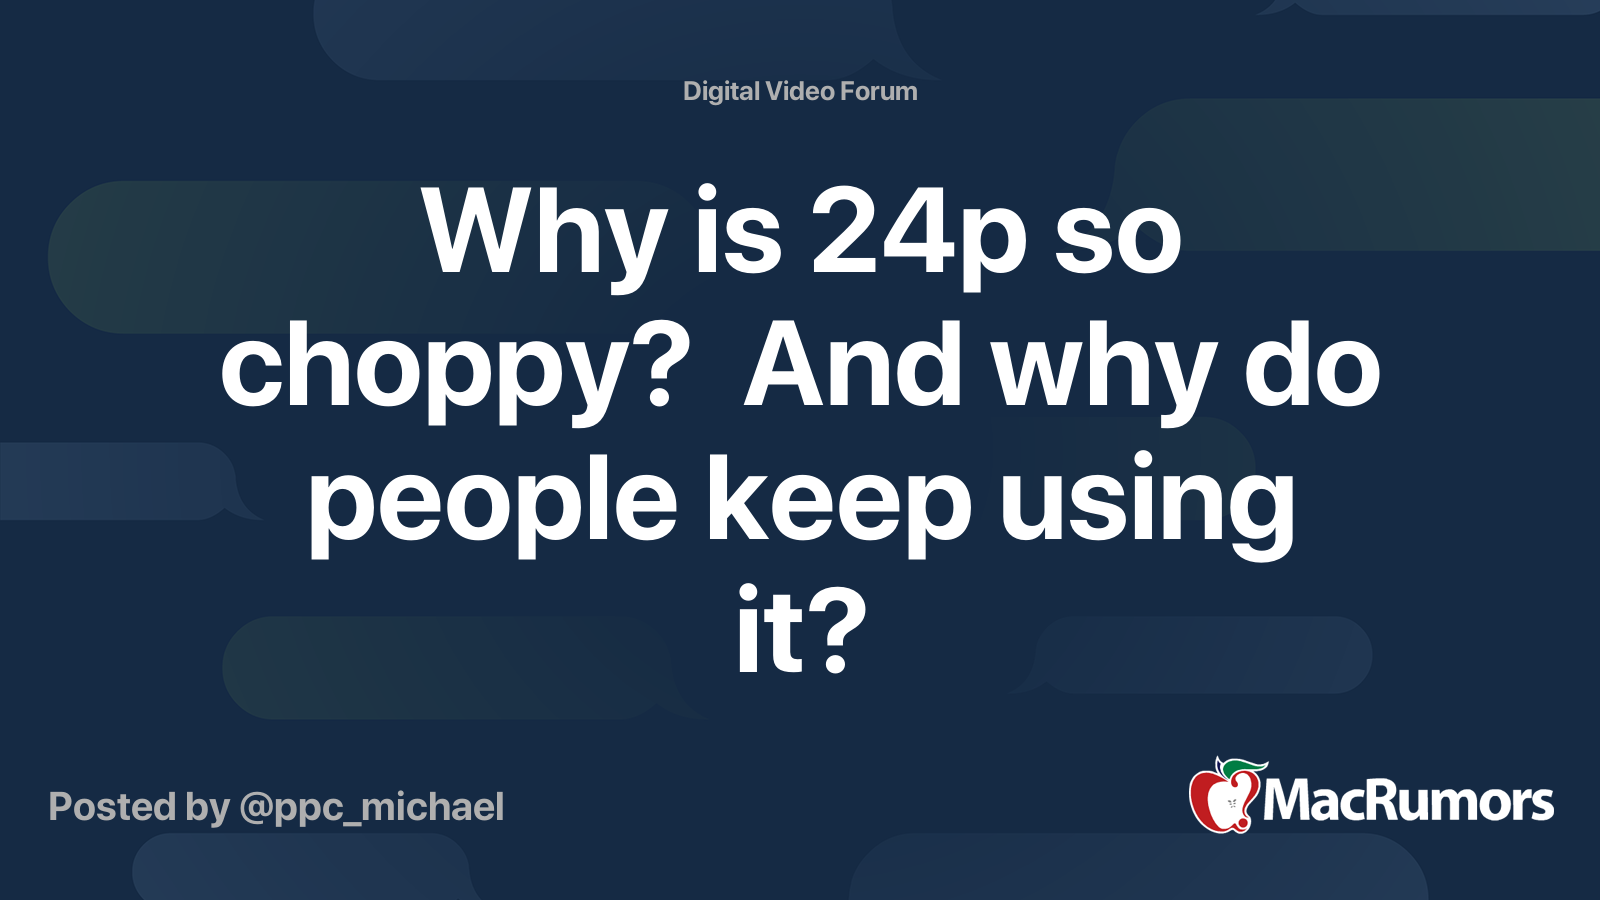 Why is 24fps choppy?